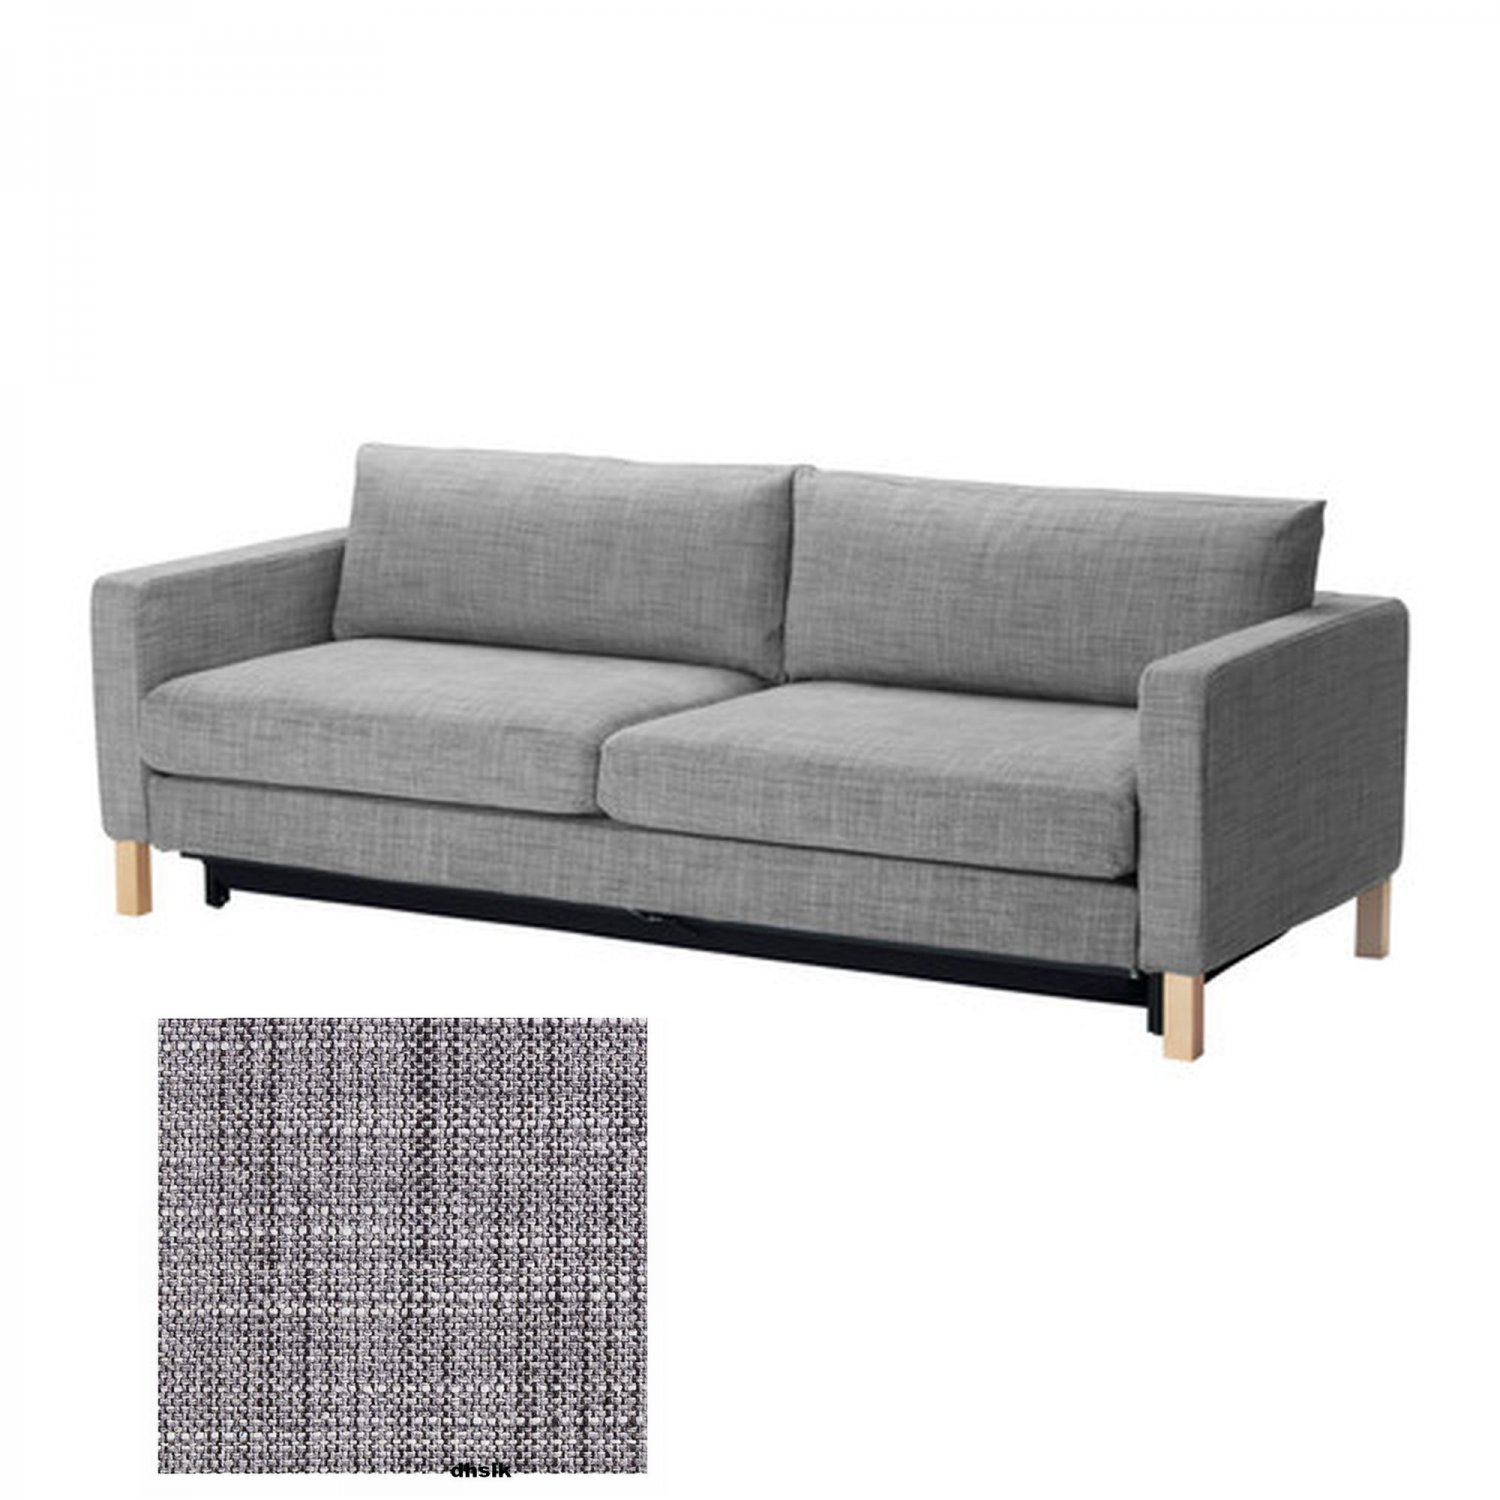 IKEA KARLSTAD Sofa Bed SLIPCOVER Cover ISUNDA GRAY Grey Linen Blend